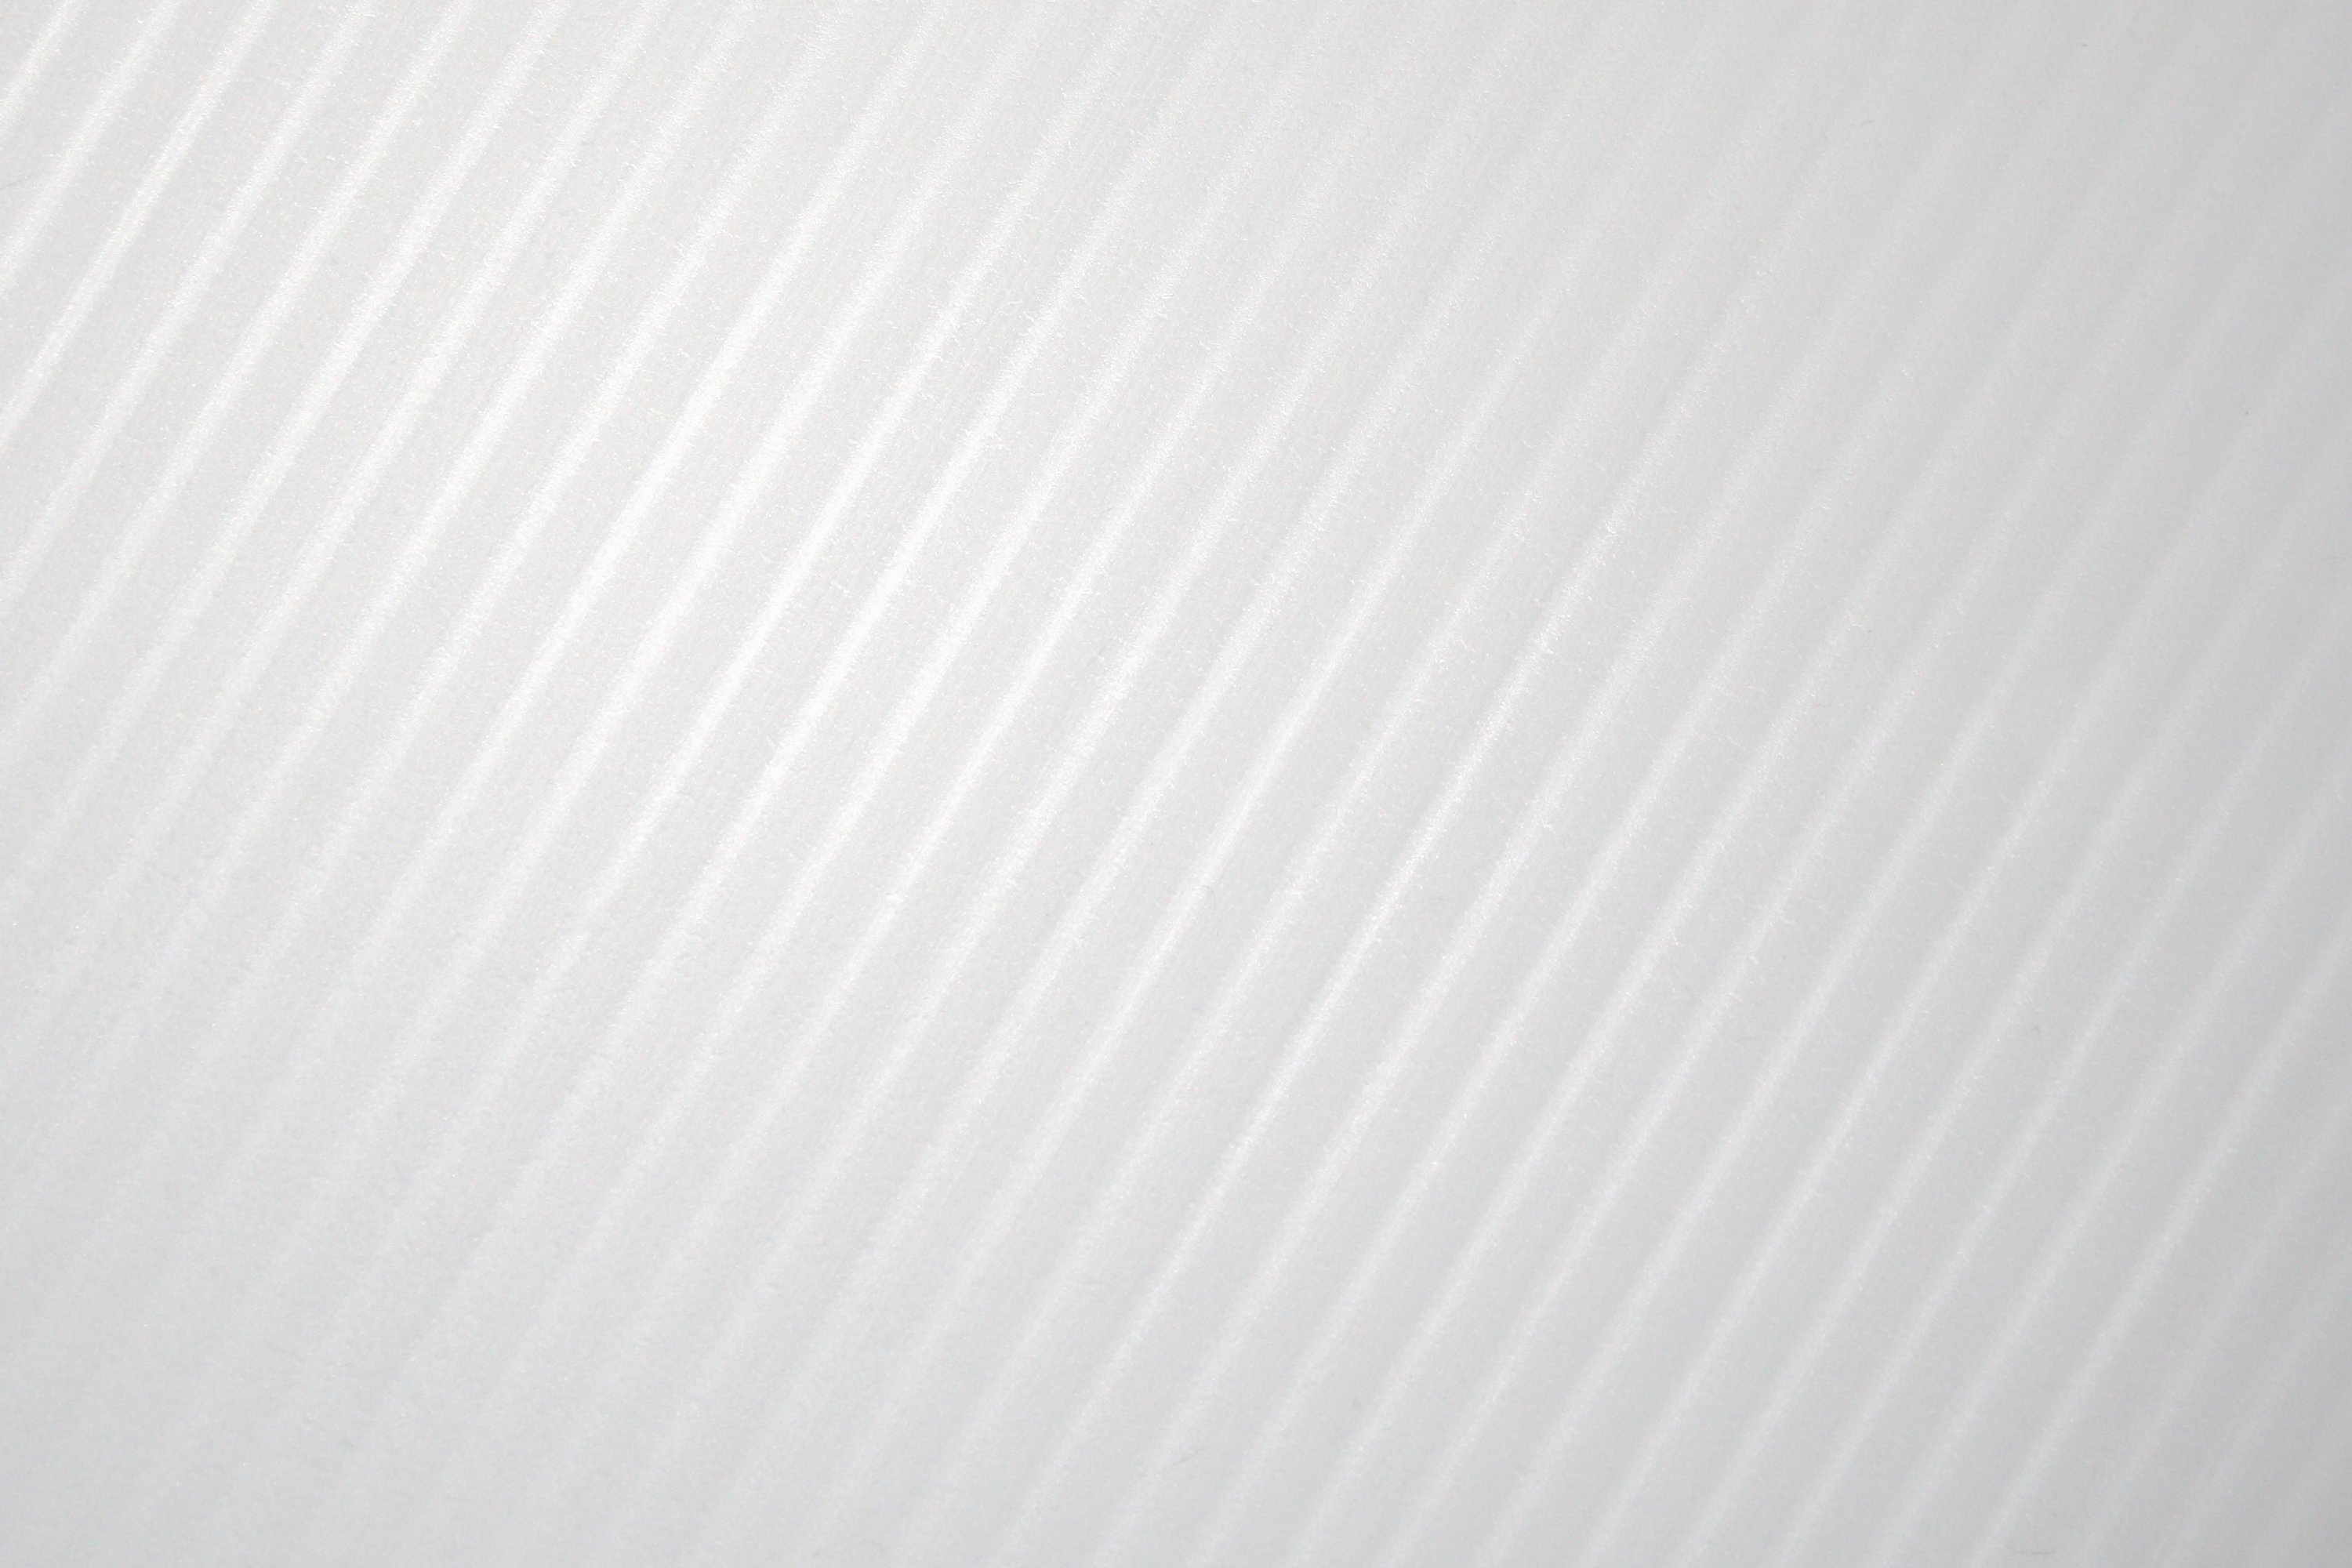 White Diagonal Striped Plastic Texture Picture